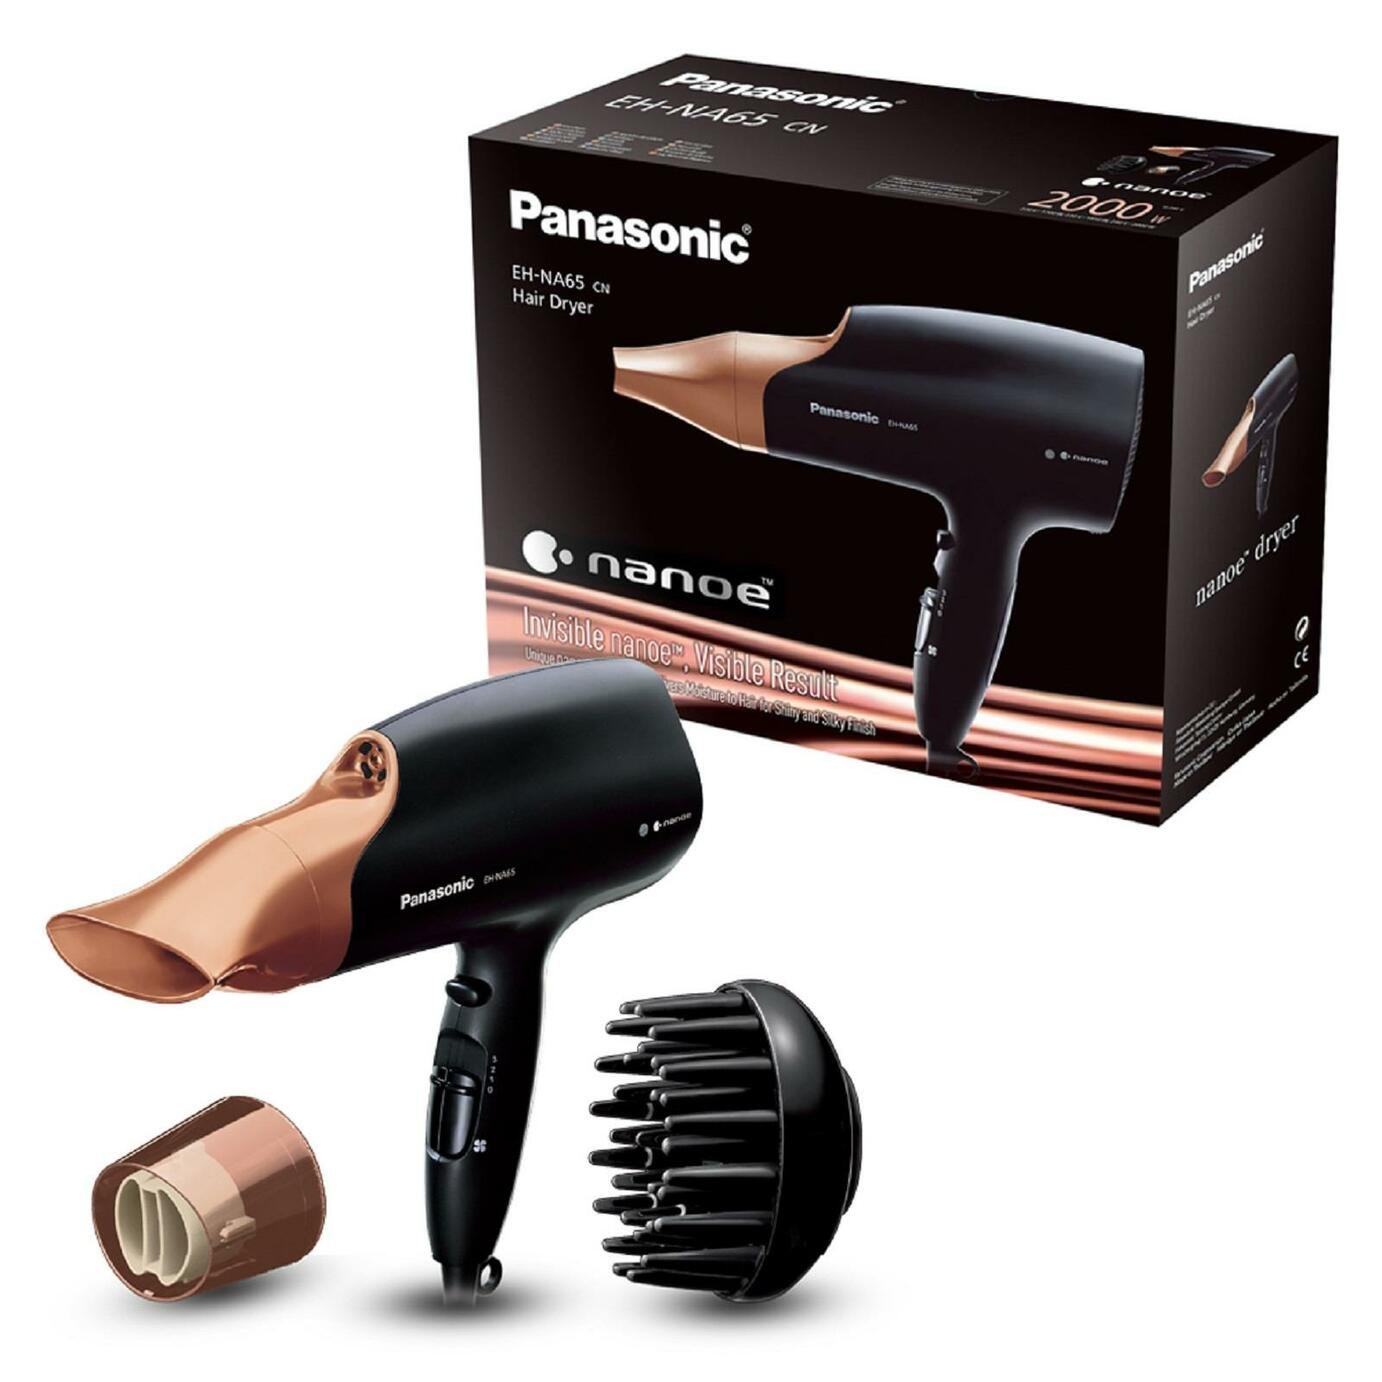 Panasonic Nanoe Hair Dryer with Diffuser review